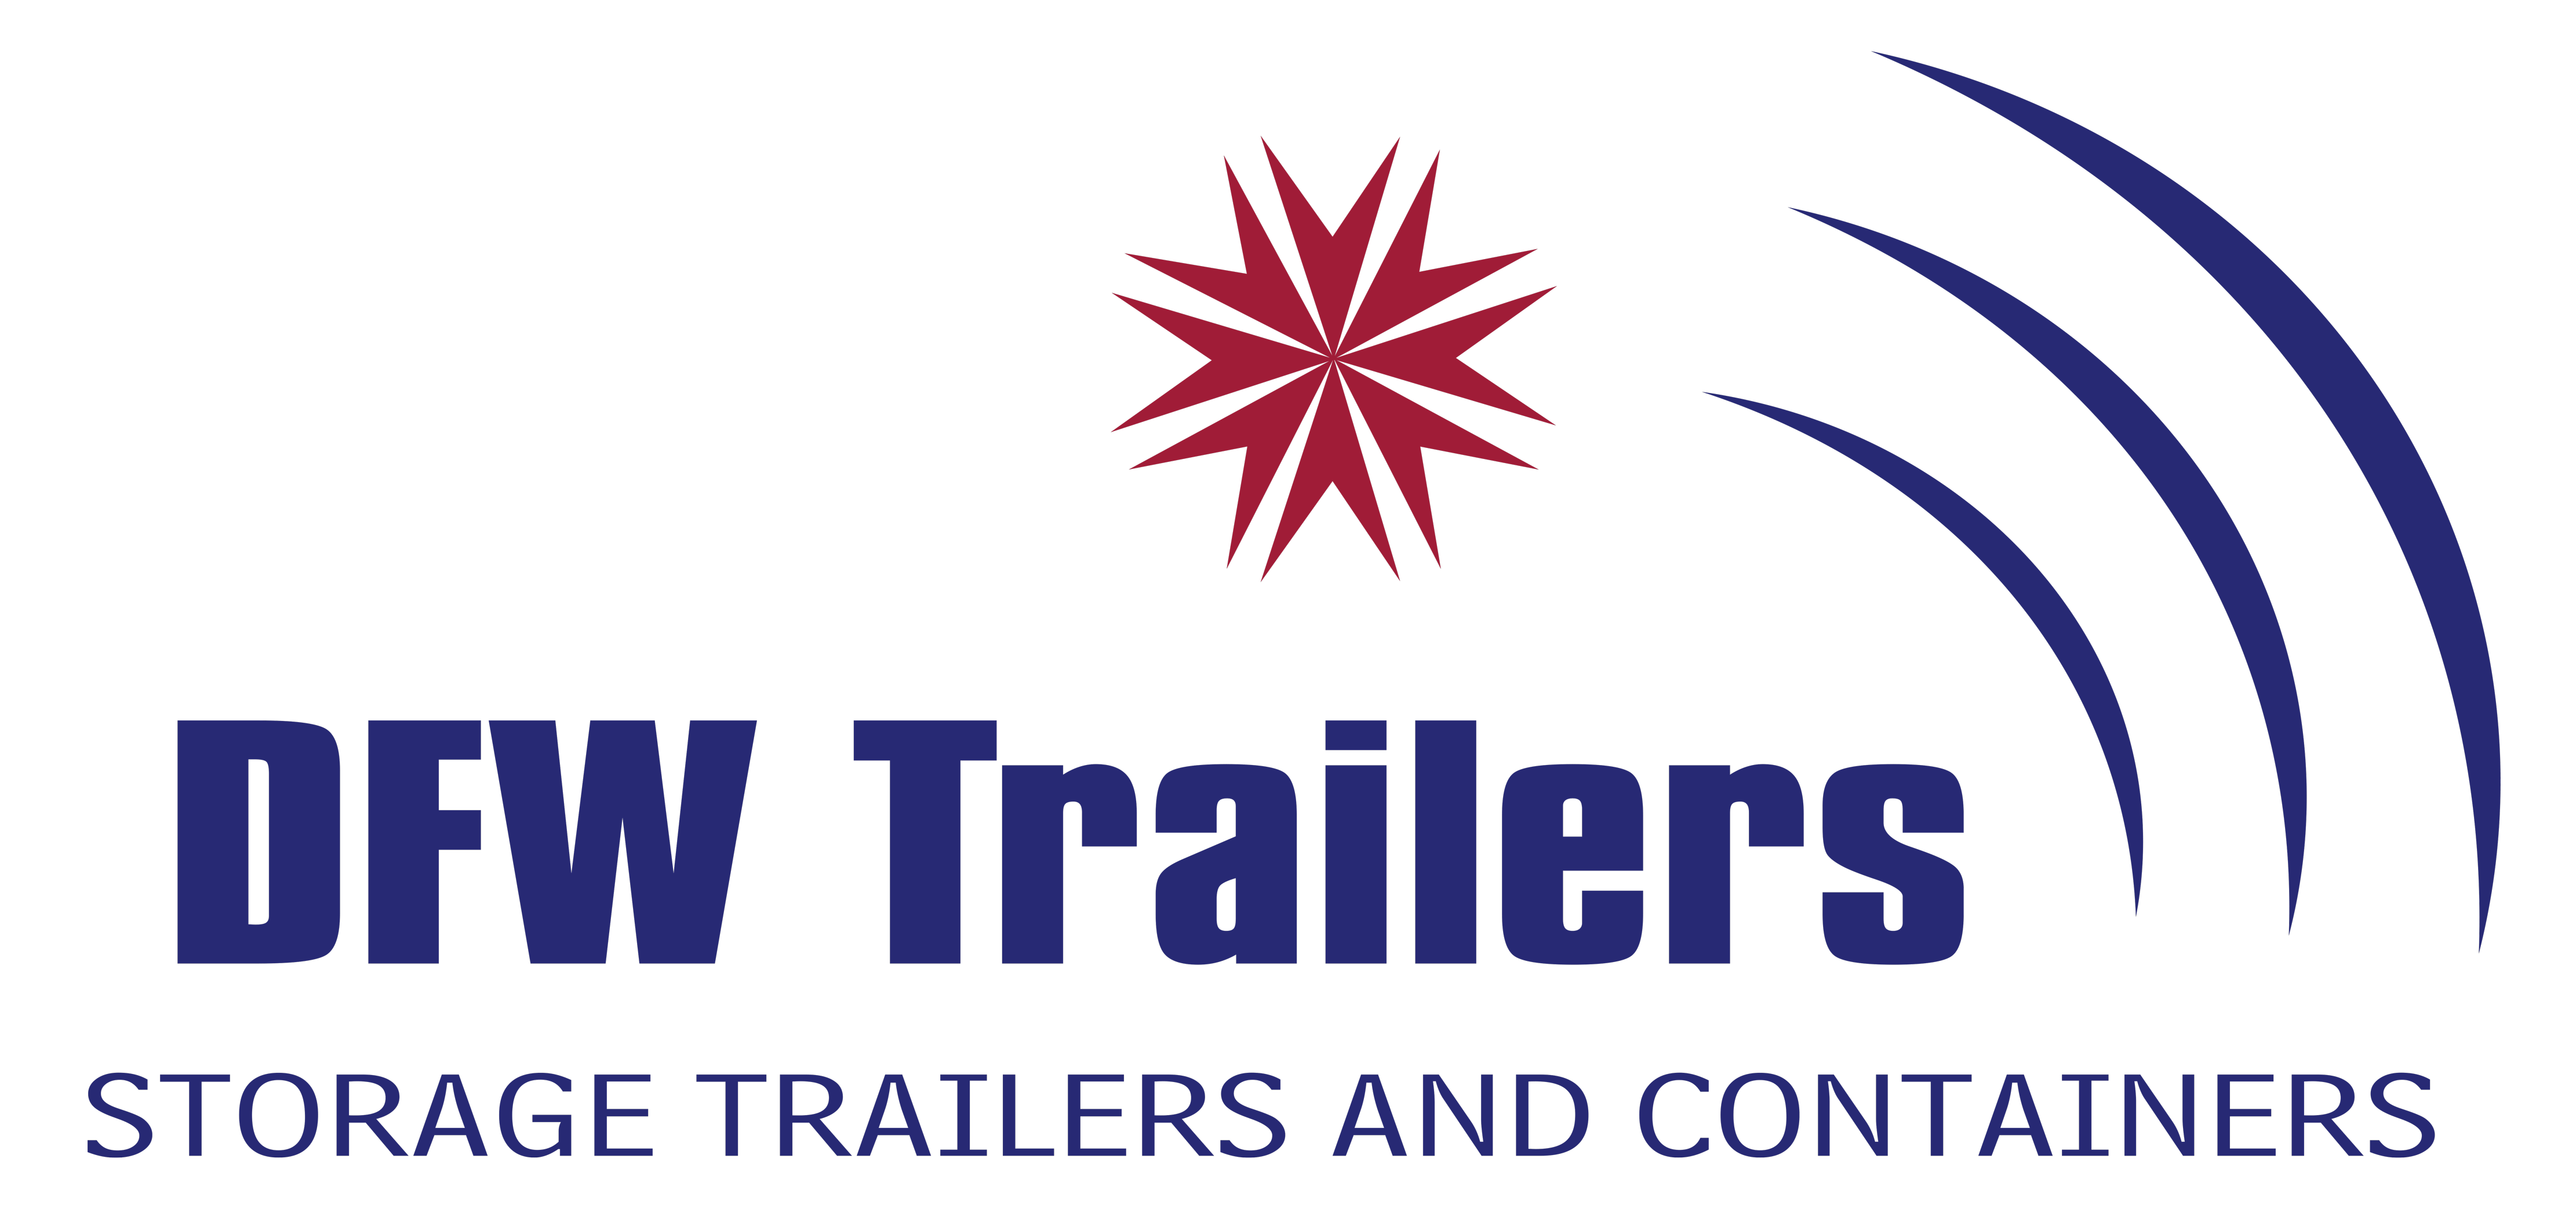 DFW Logo - DFW Trailers | Storage Trailers & Containers.